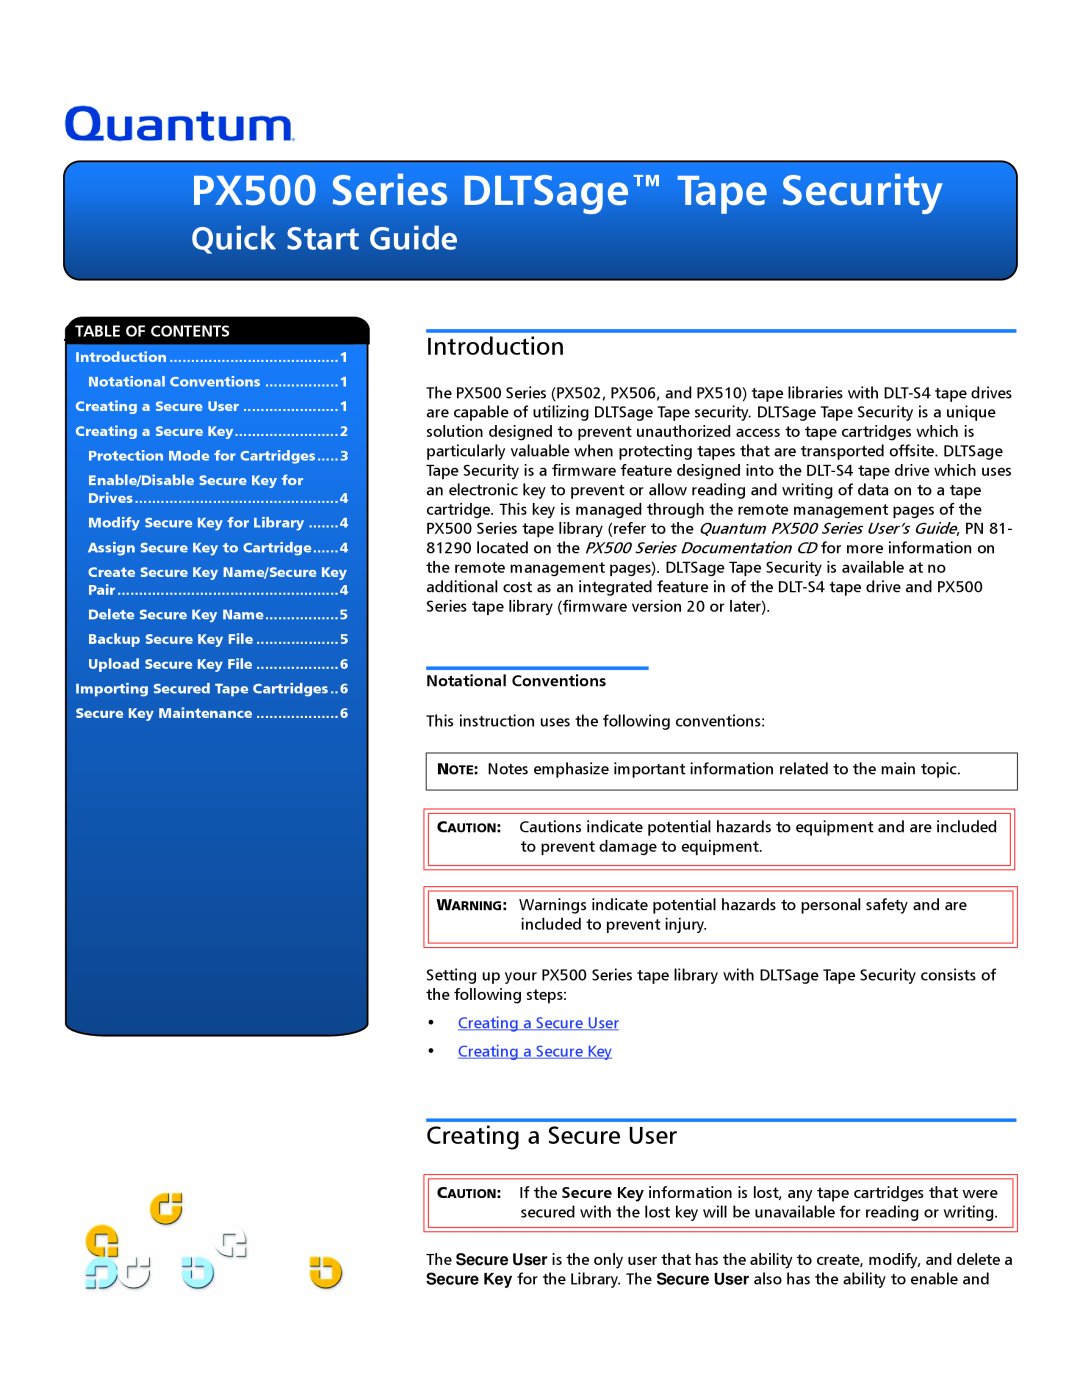 Quantum PX500 Series quick start Introduction, Creating a Secure User Creating a Secure Key, Quick Start Guide 